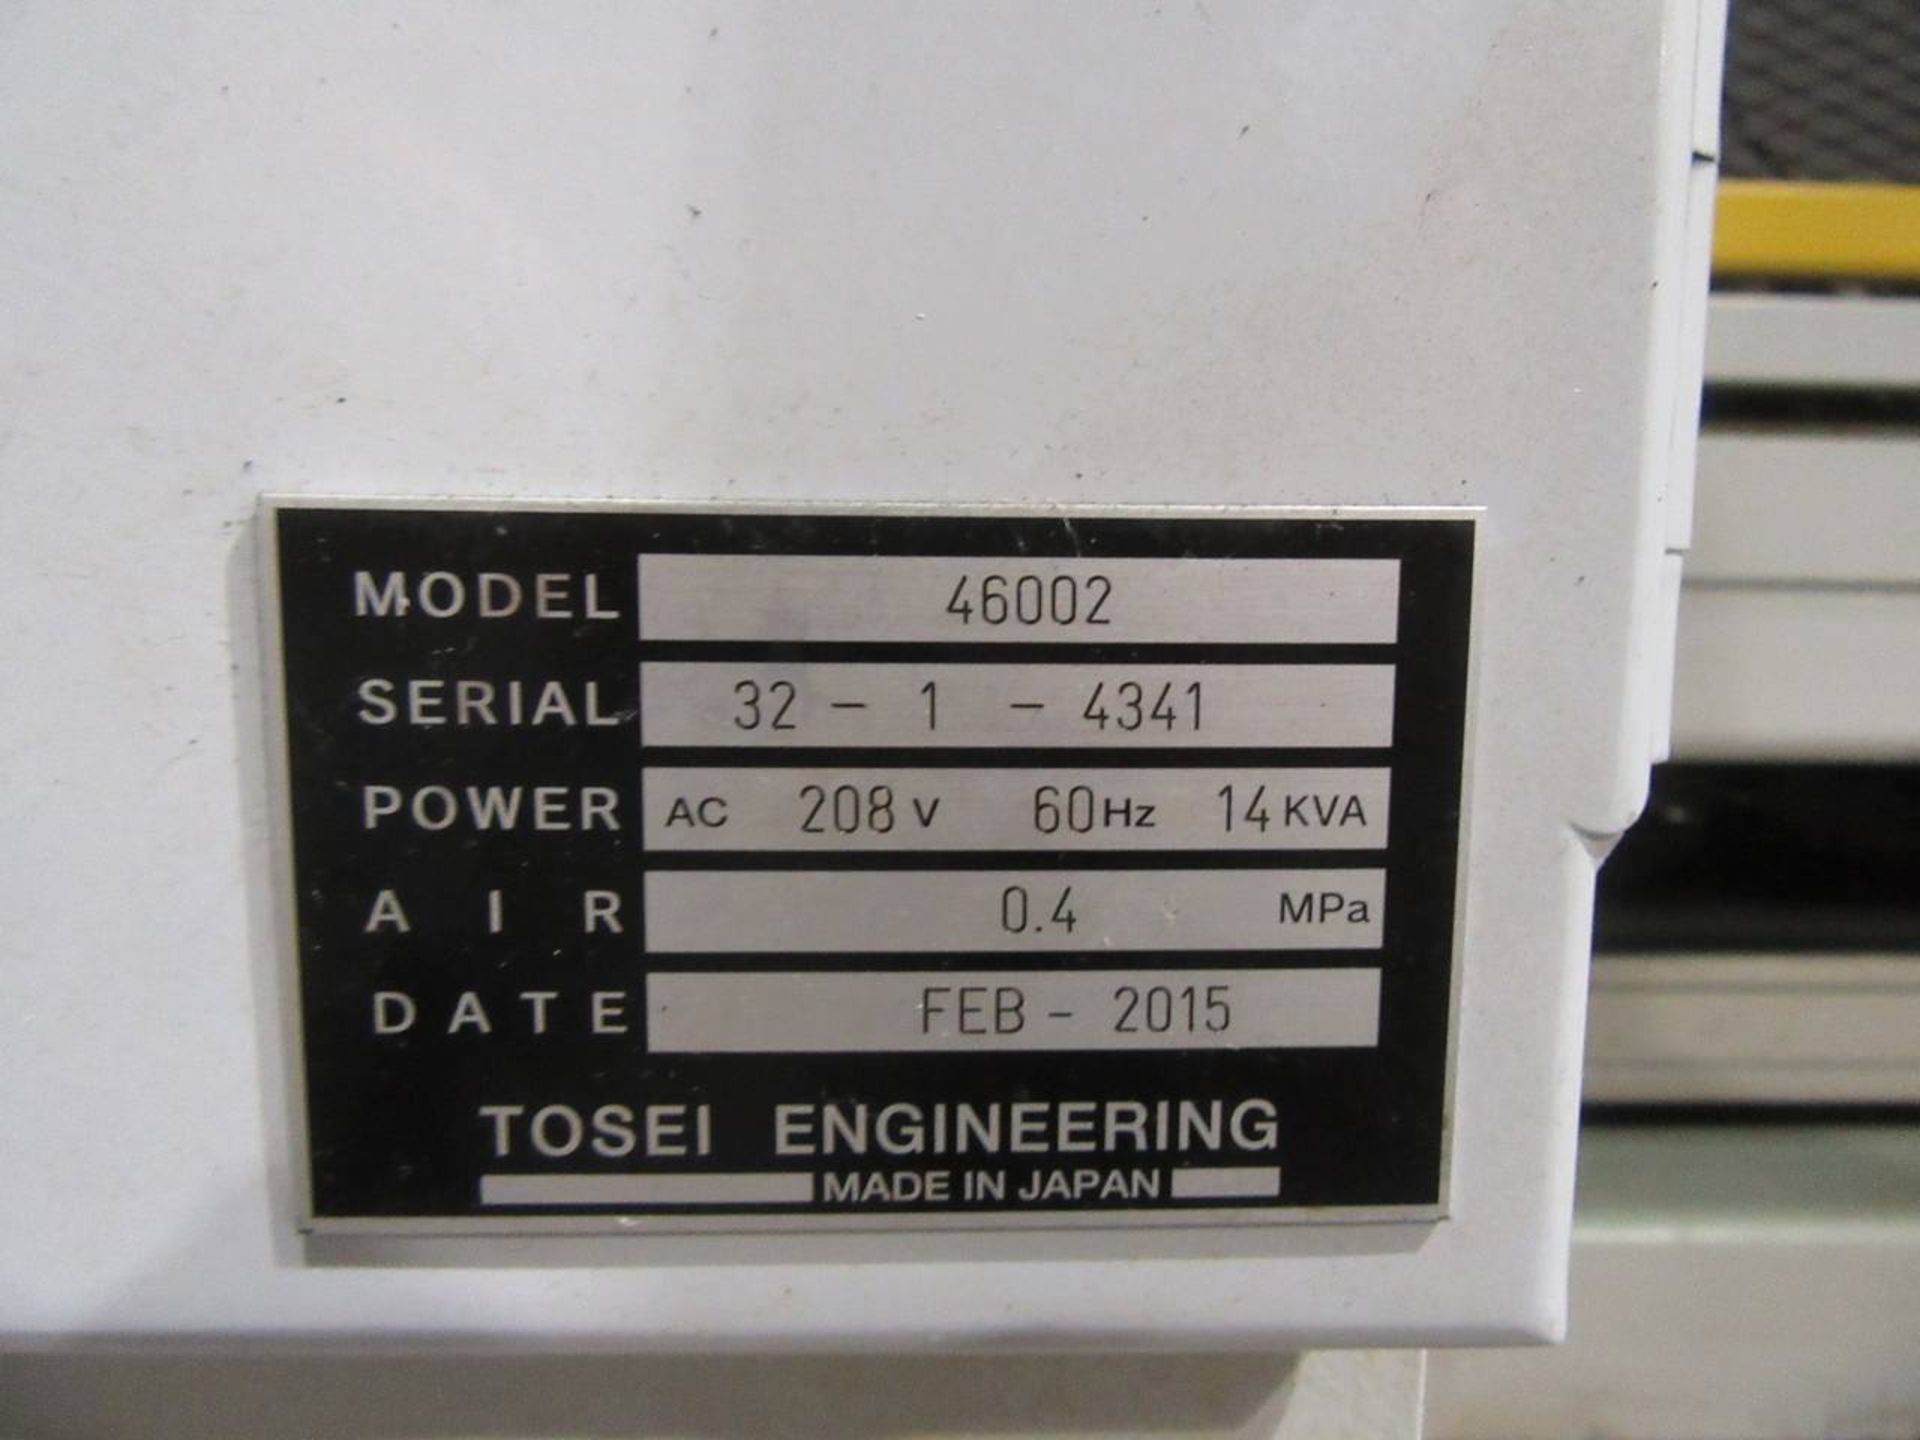 2015 Tosei Engineering 46002 Accretch Measuring Machine - Image 5 of 5